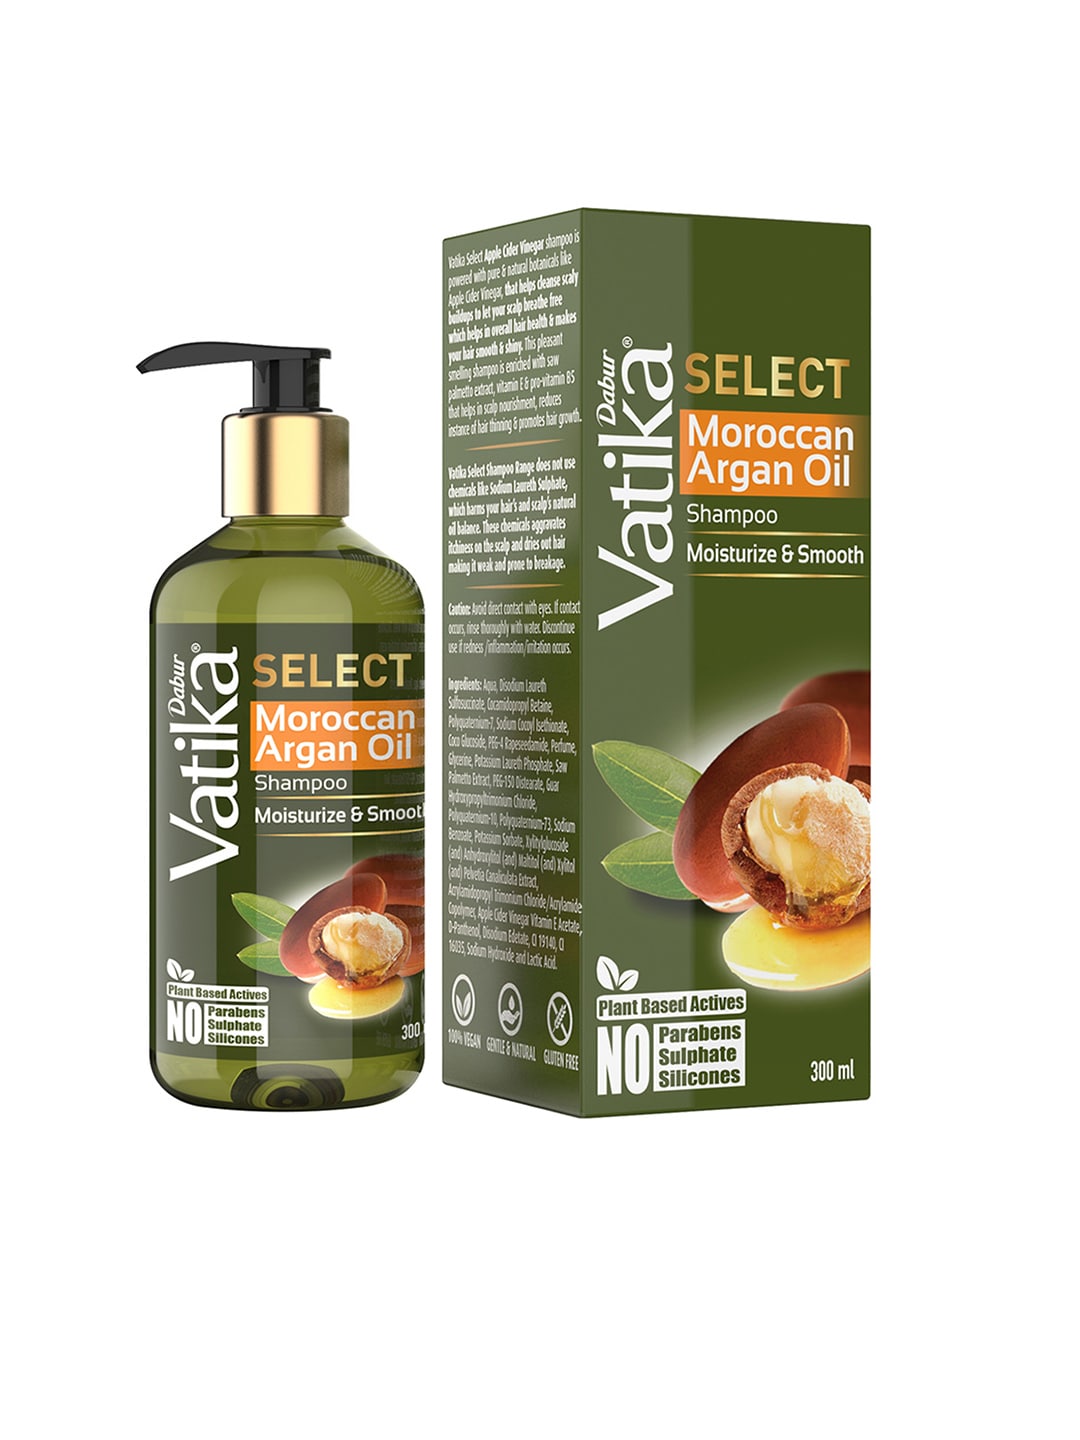 Dabur Vatika Select Moroccan Argan Oil Shampoo for Moisturize & Smooth - 300 ml Price in India